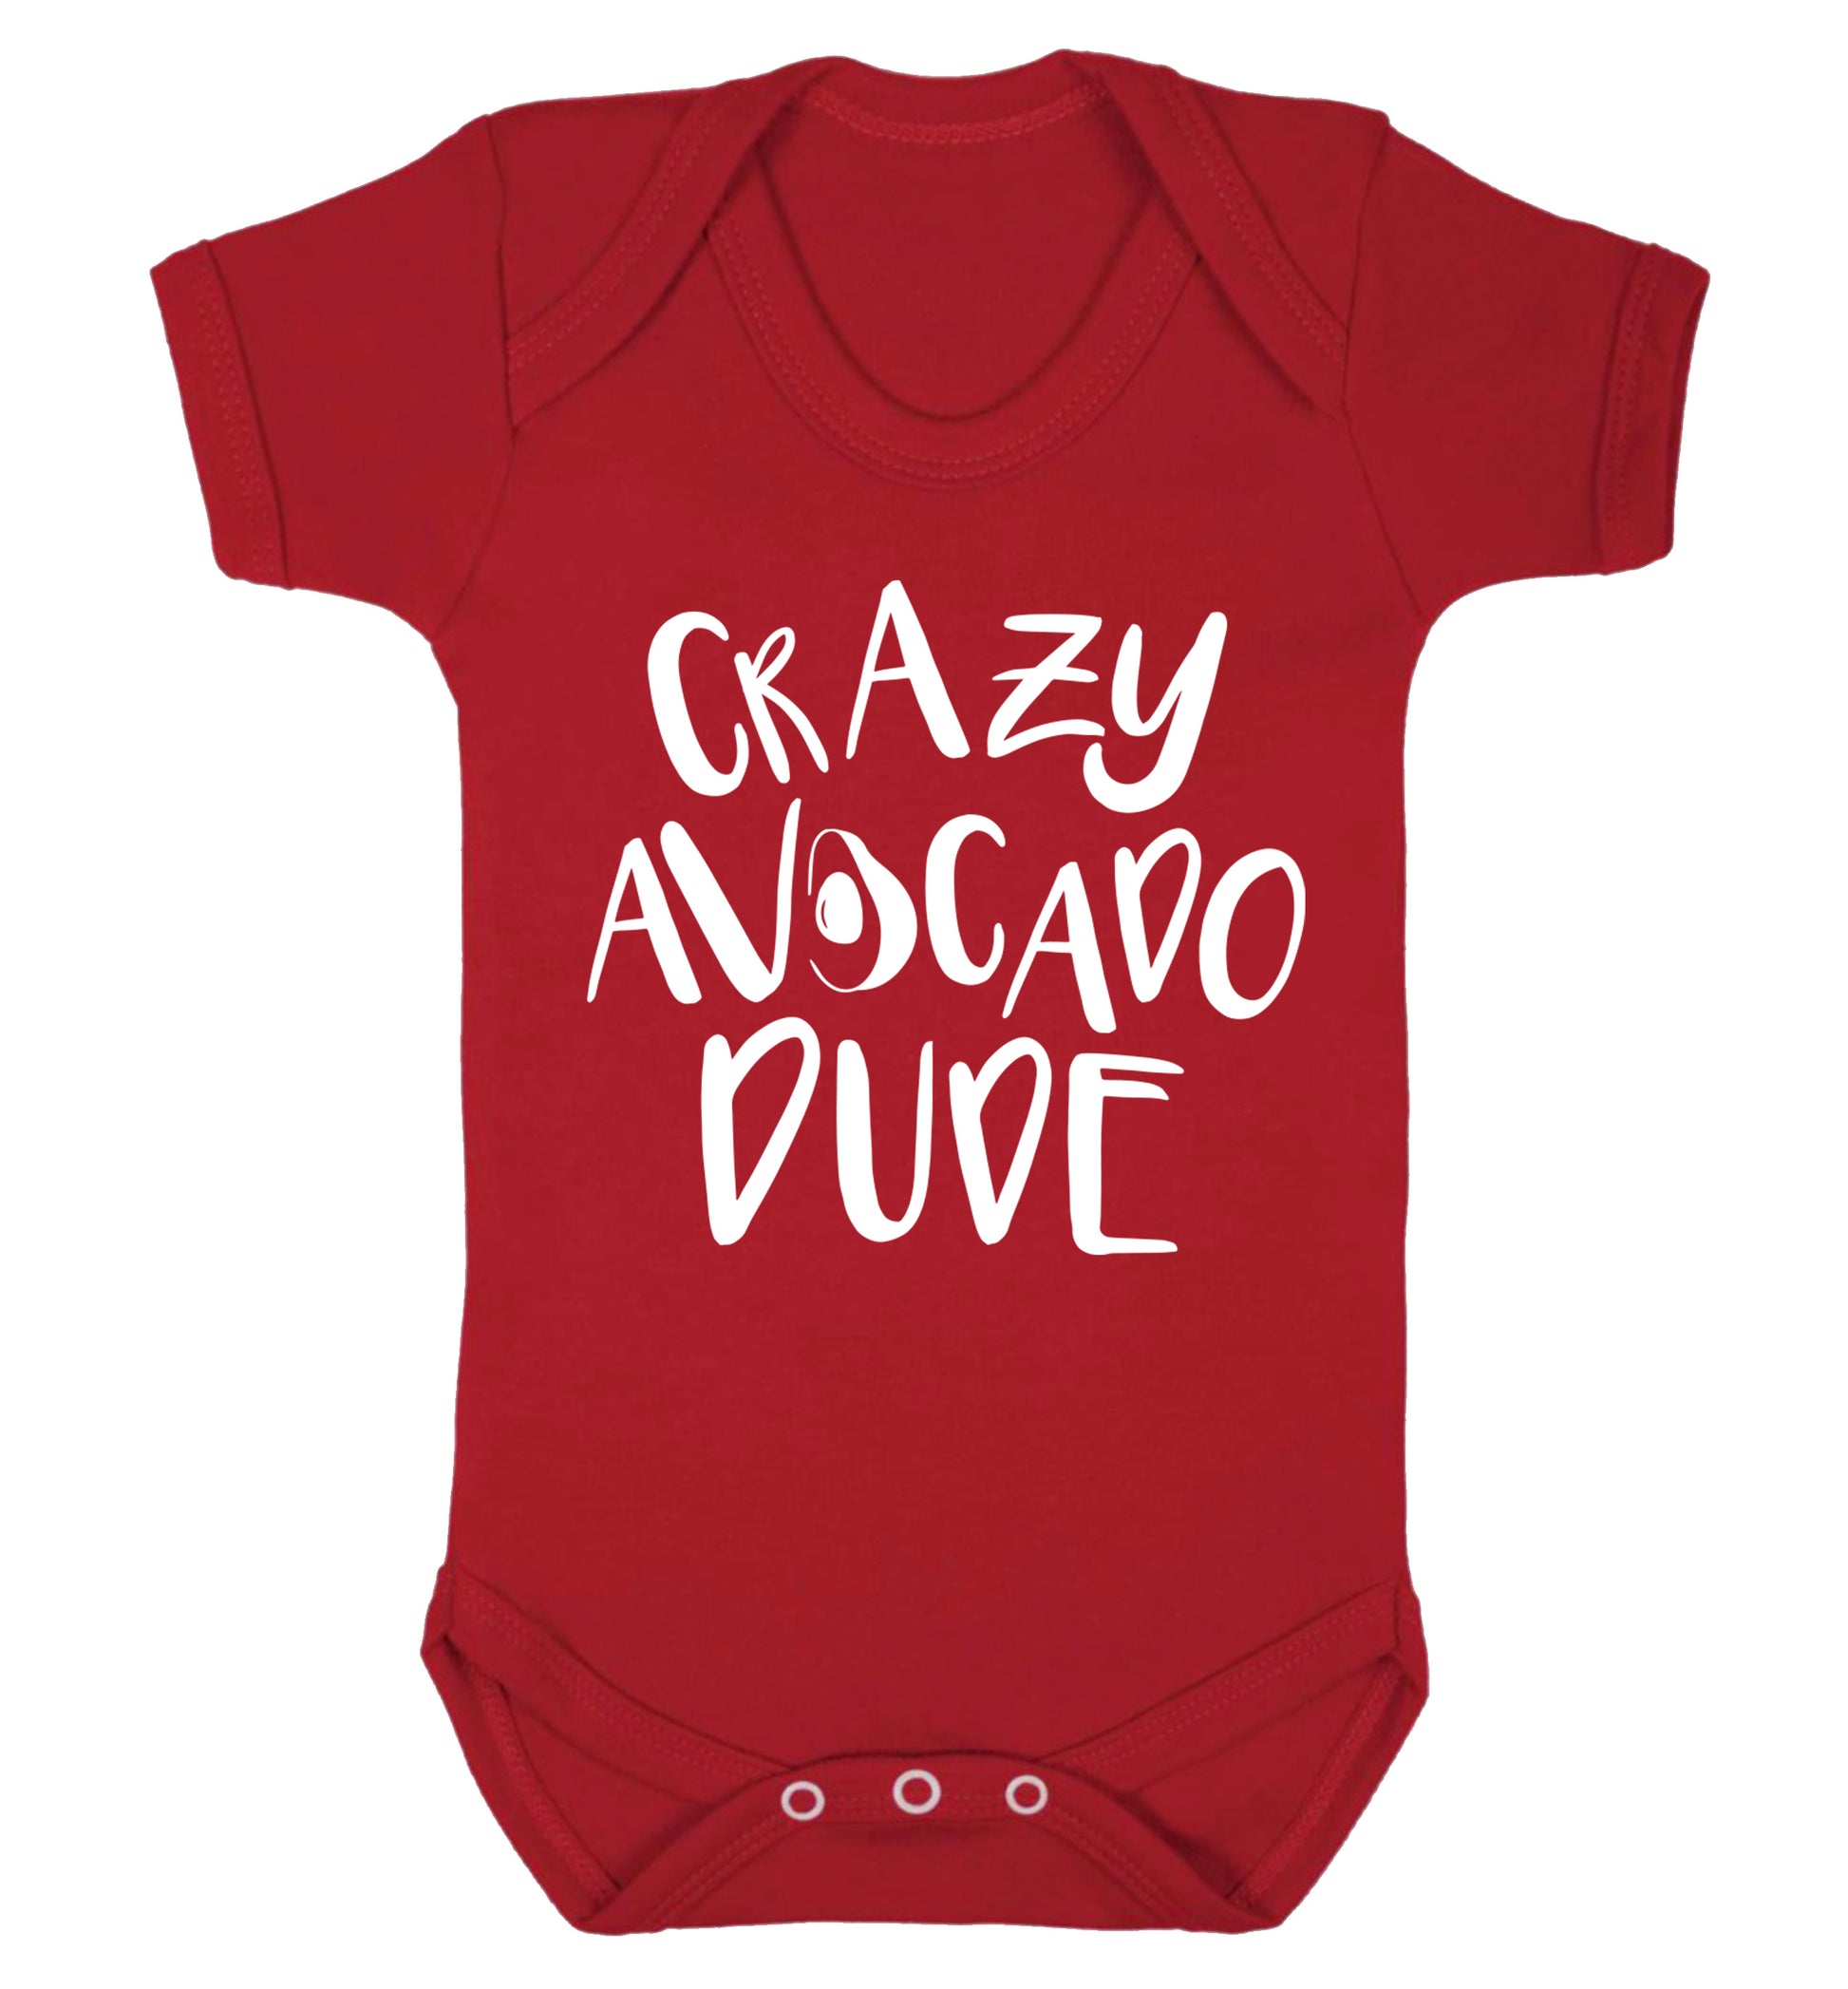 Crazy avocado dude Baby Vest red 18-24 months